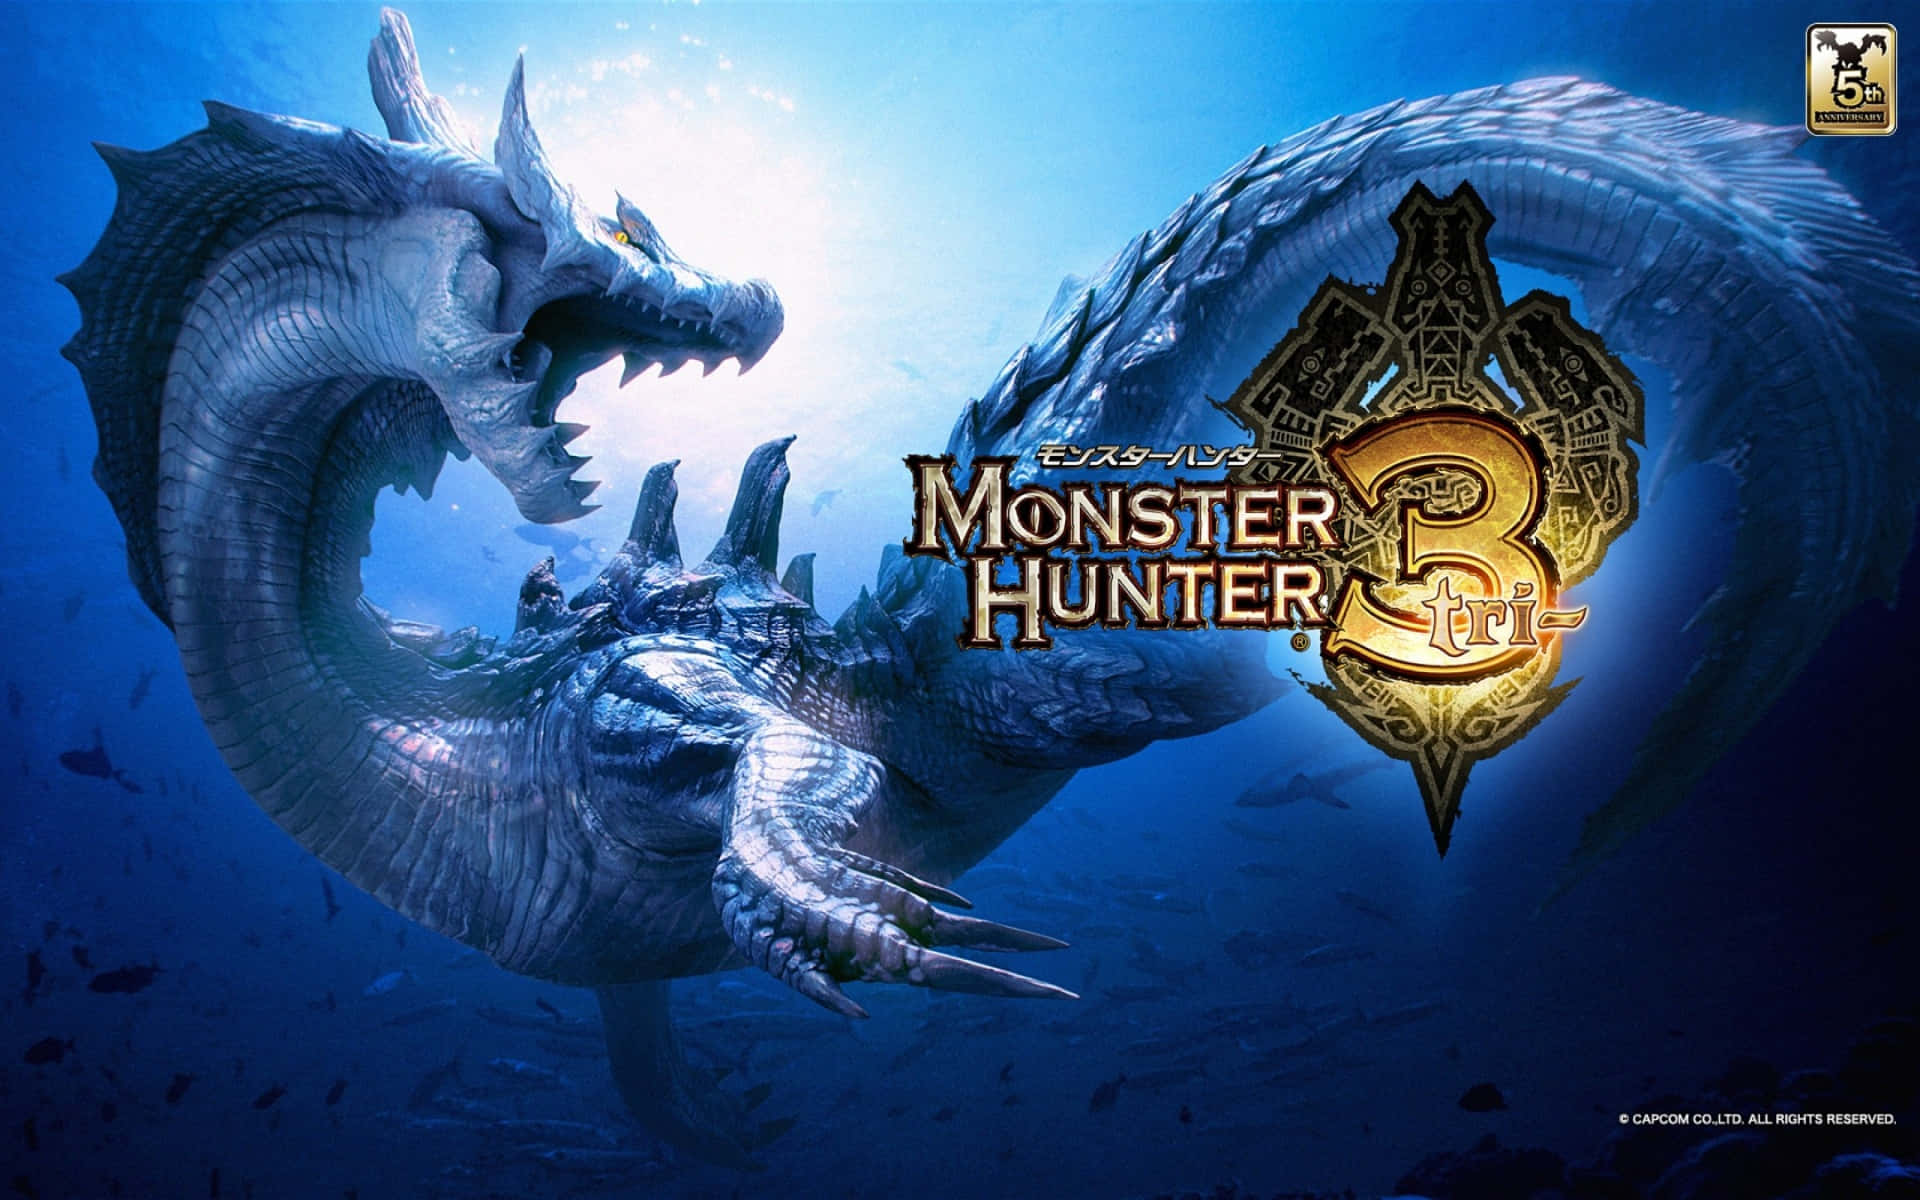 spMonster Hunter 3 - PS3 - PS3 - PS3 - PS3 - PSP Wallpaper